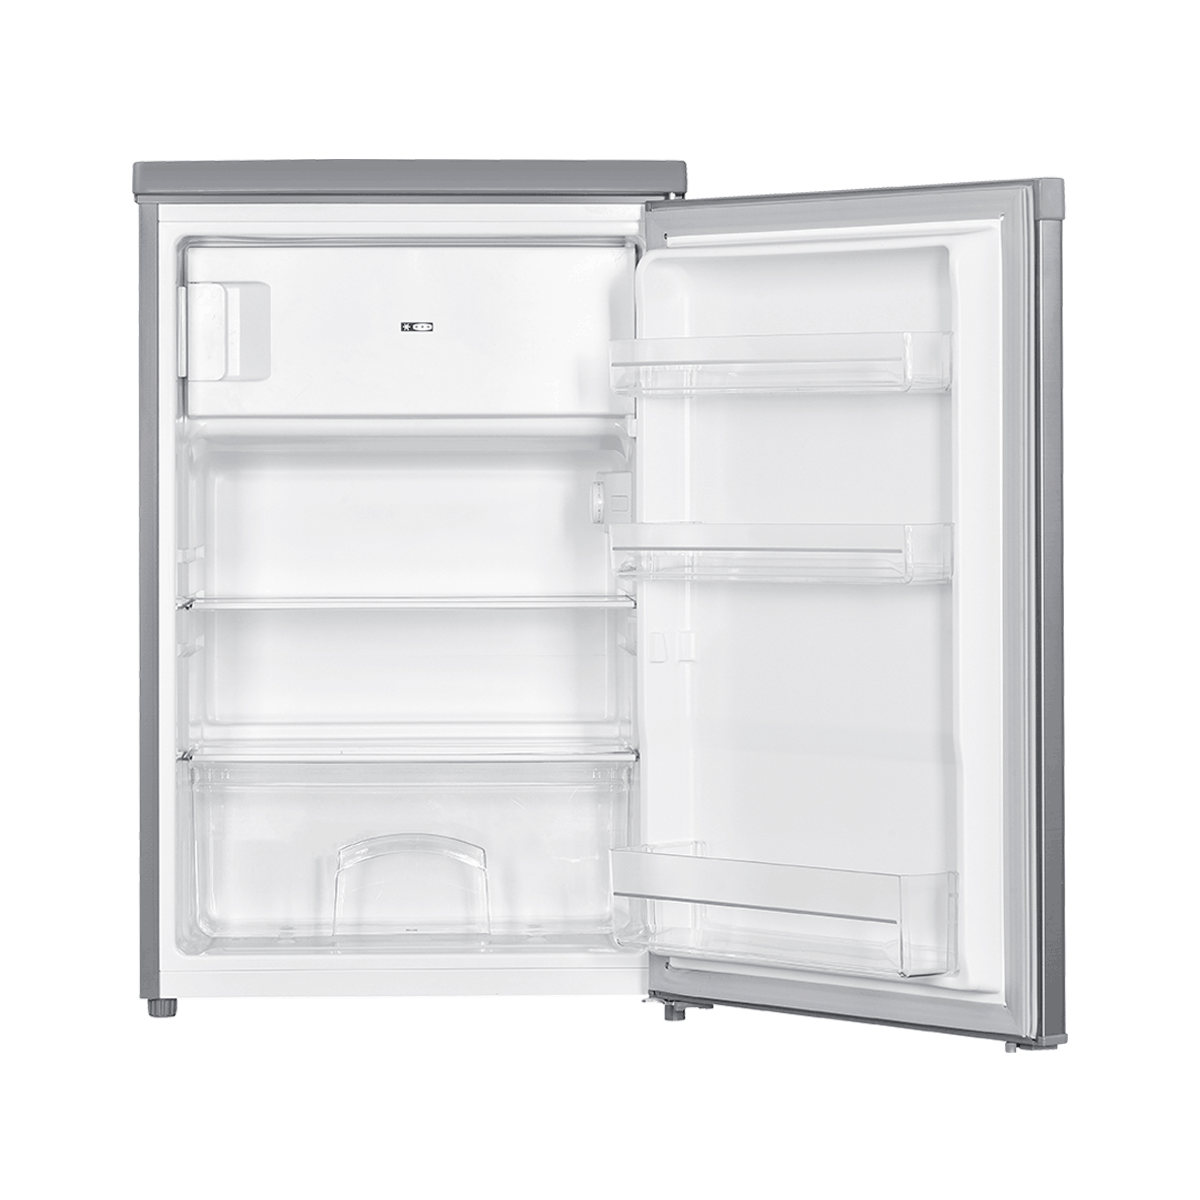 Refrigerator KS 1610 SE 